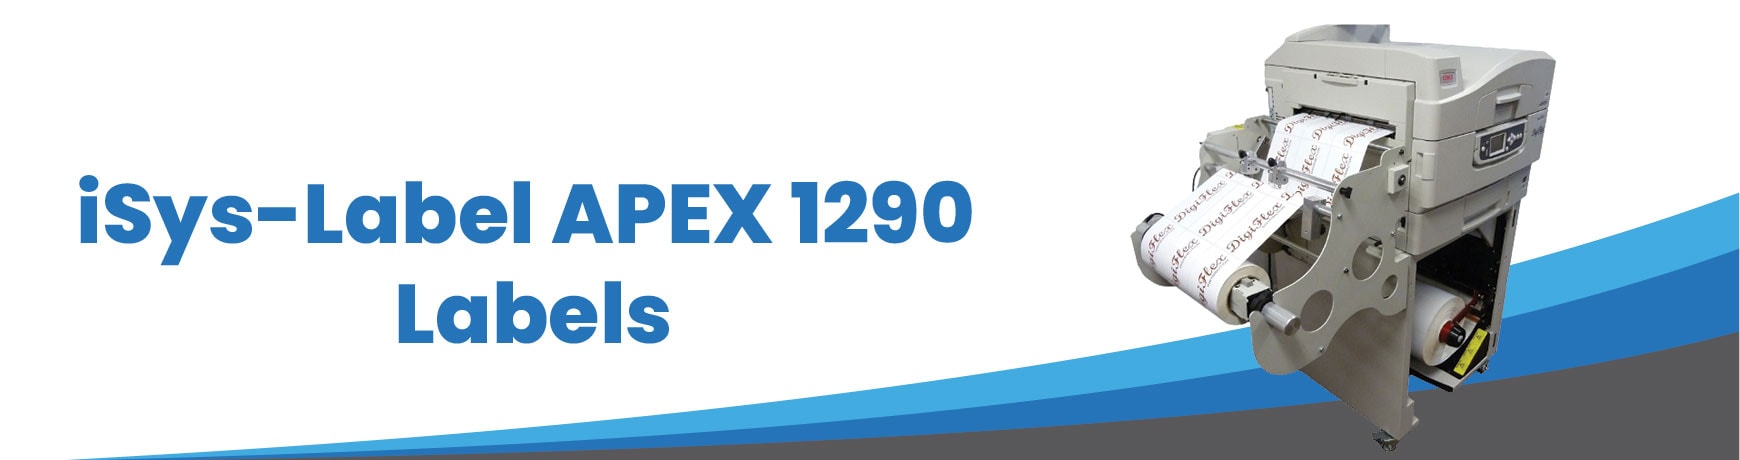 iSys-Label APEX 1290 Labels